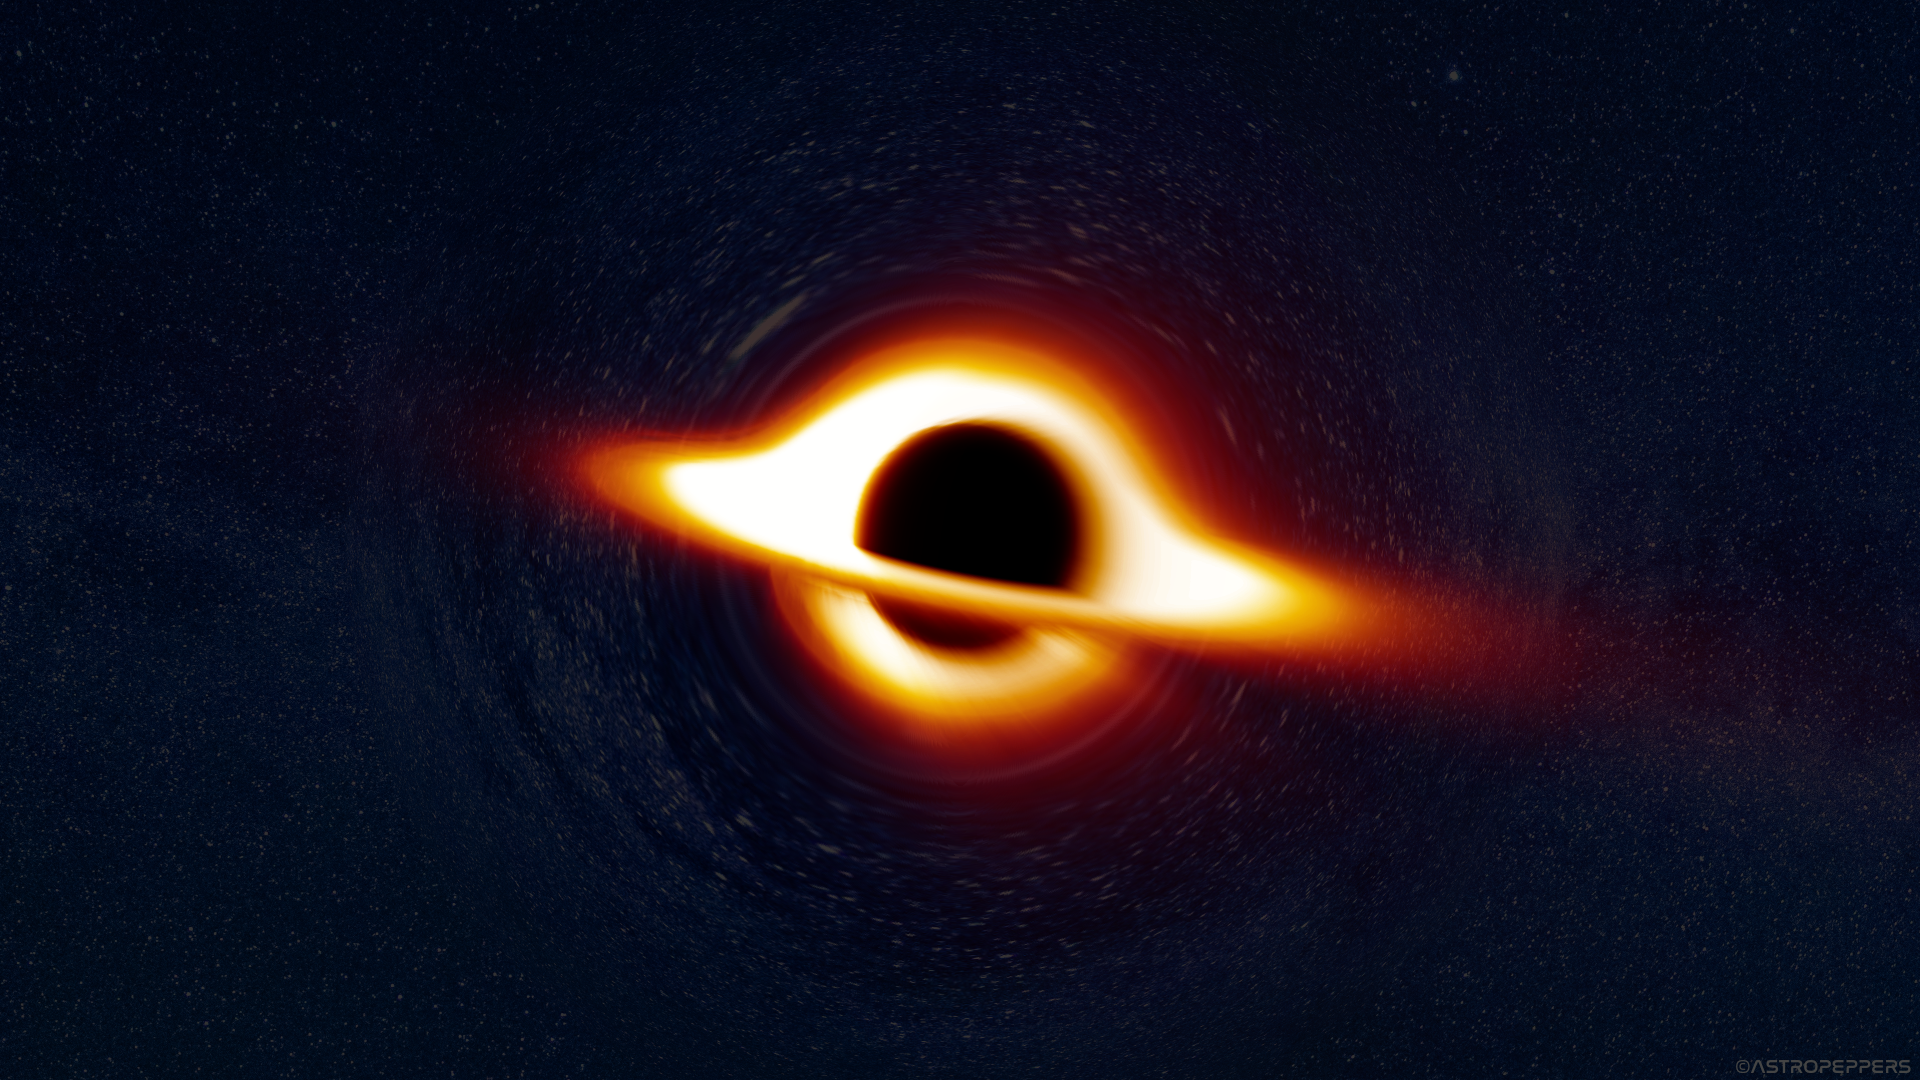 Wallpaper / space, black holes, supermassive black hole, Interstellar (movie), space art free download